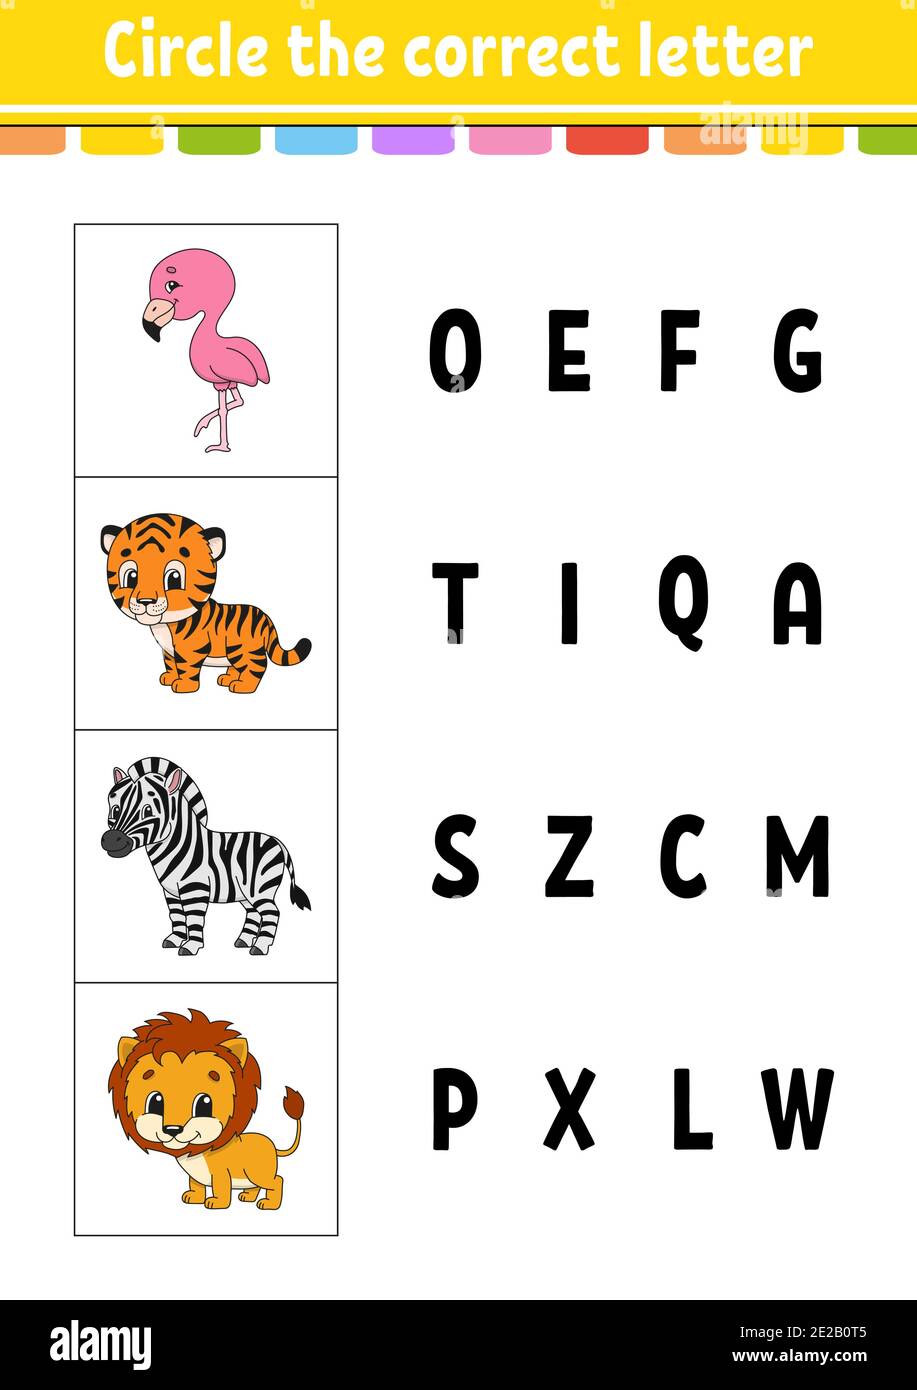 circle-the-correct-letter-zebra-flamingo-tiger-lion-education-developing-worksheet